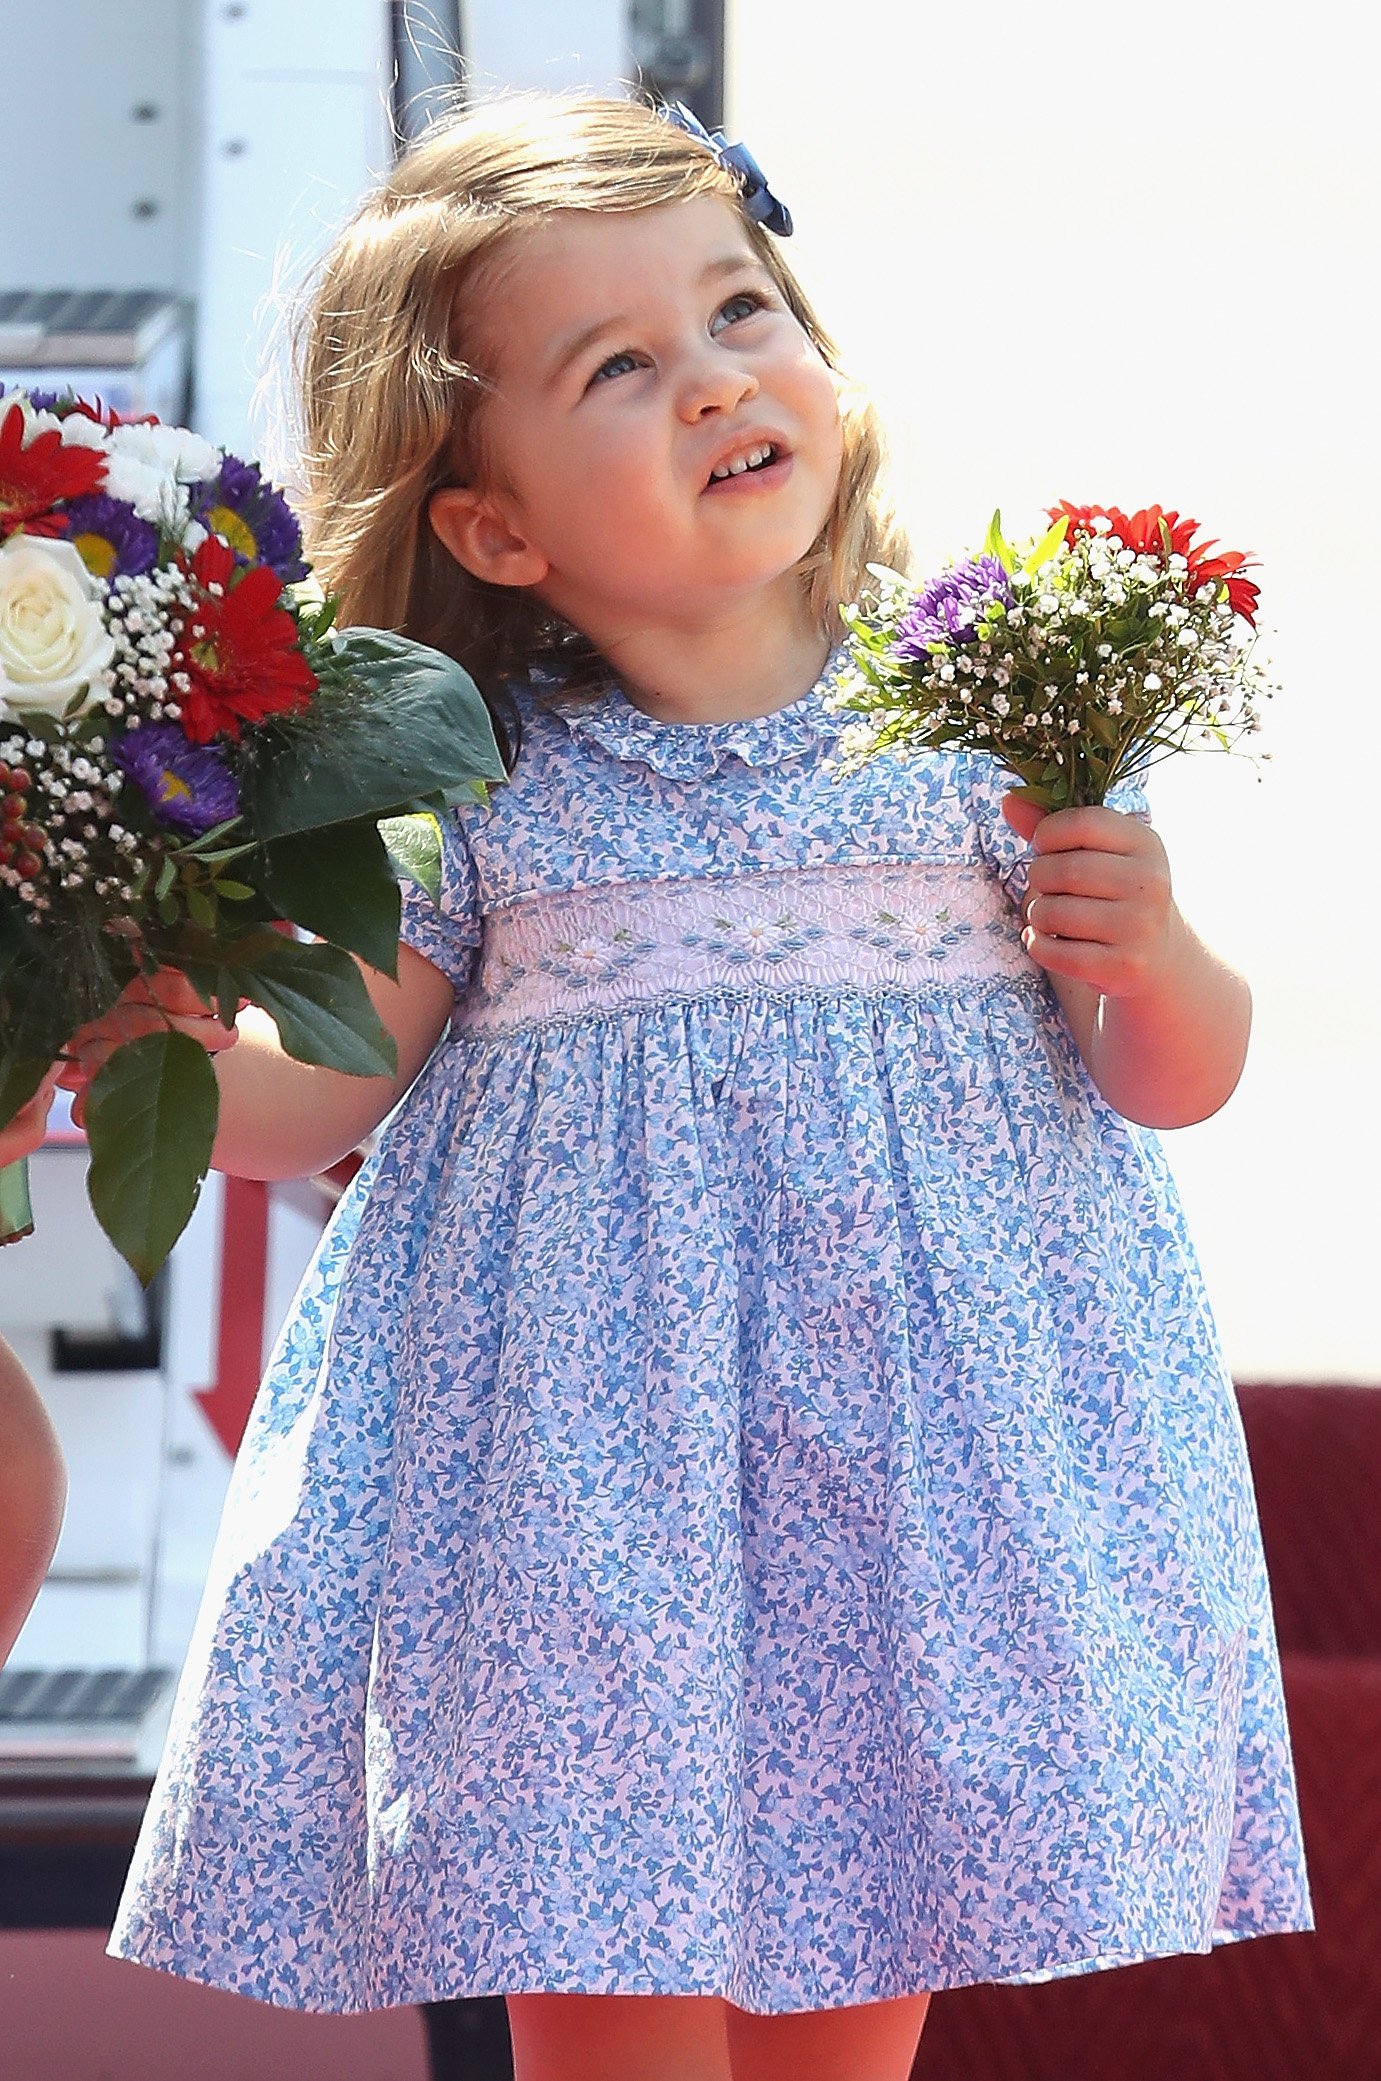 Princess Charlotte of Cambridge l Image: Getty Images